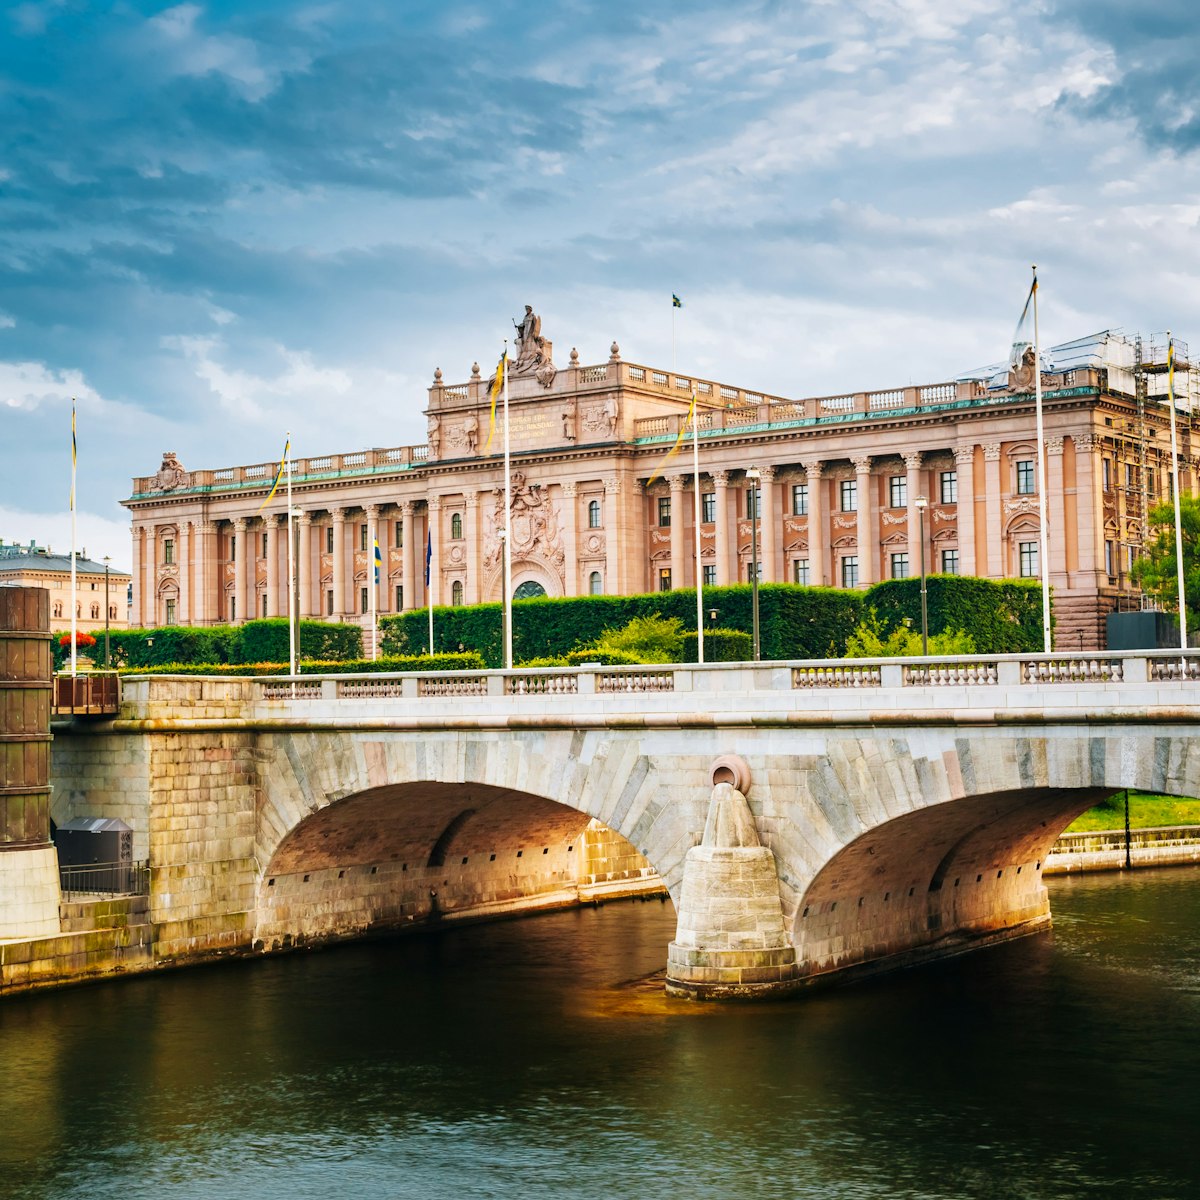 Riksdag Parliament Building and Norrbro Bridge in Stockholm, Sweden.